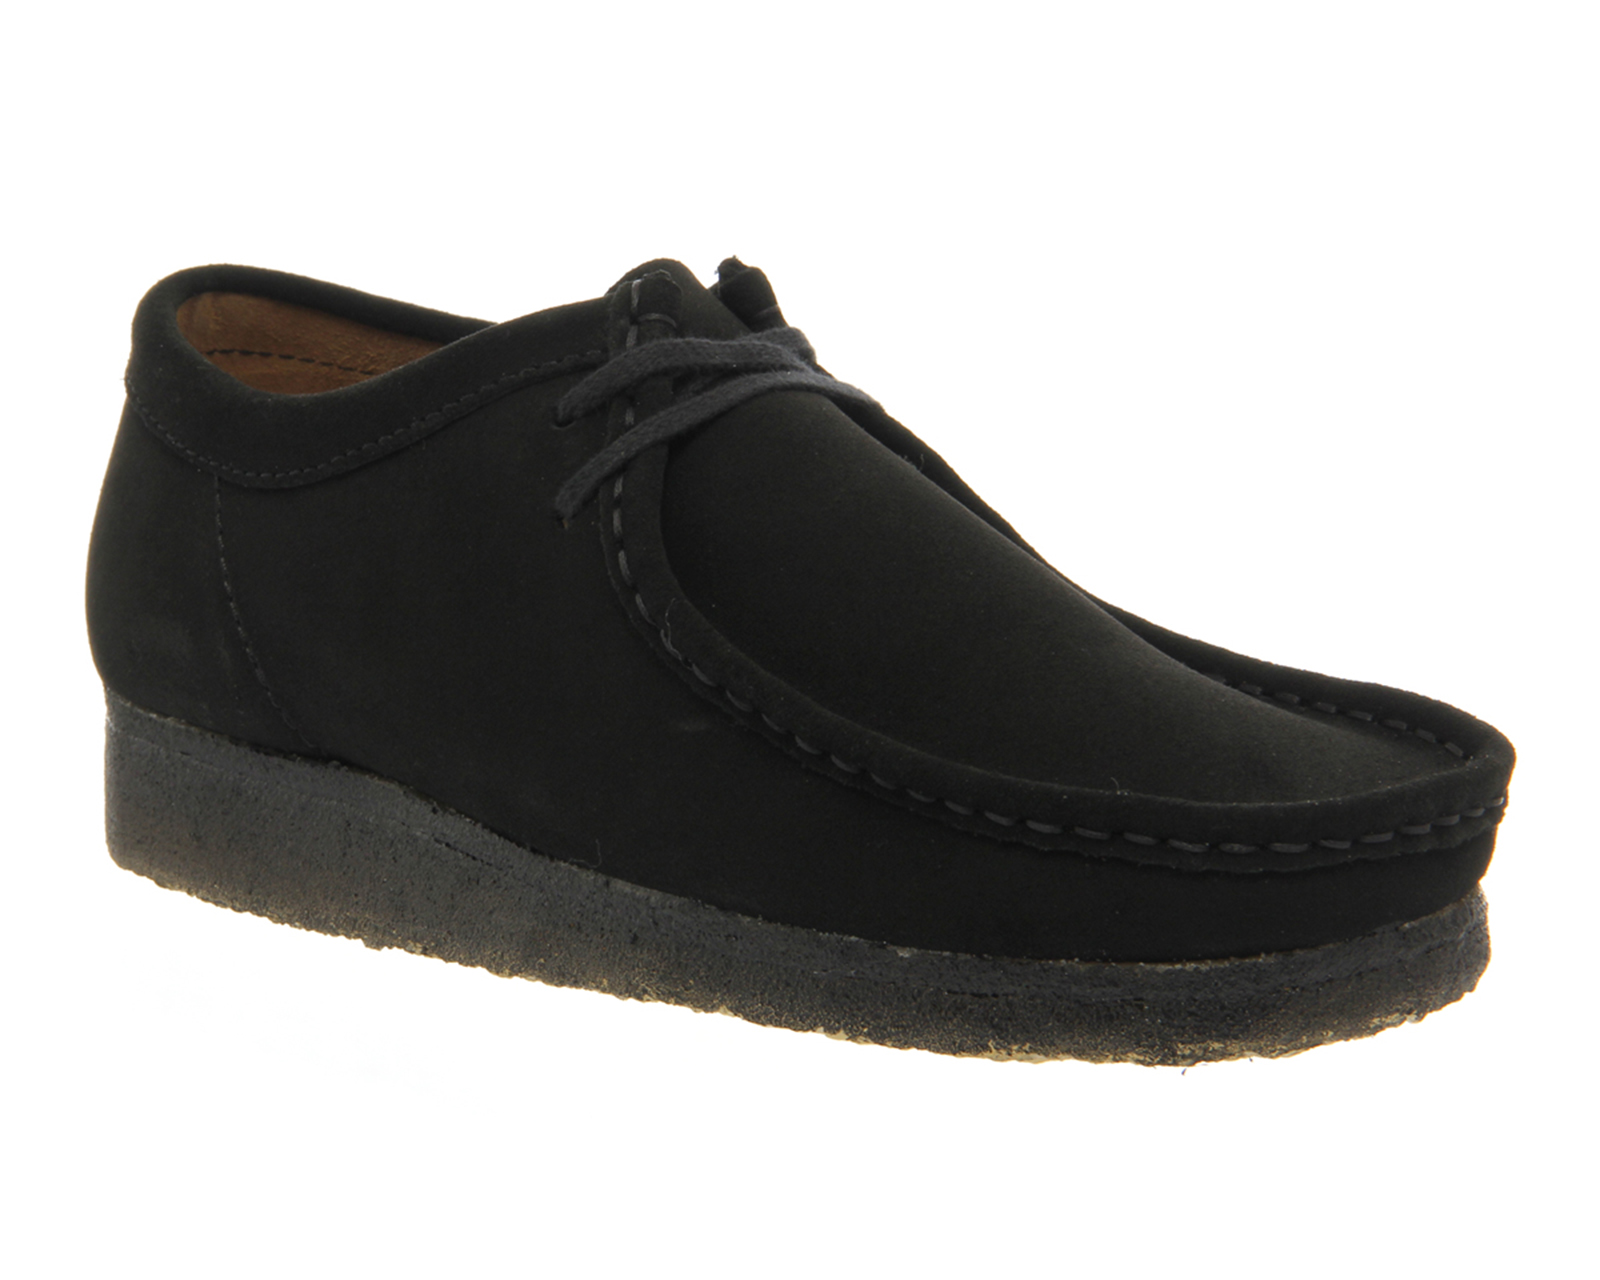 Clarks Originals Wallabee Shoes Black 